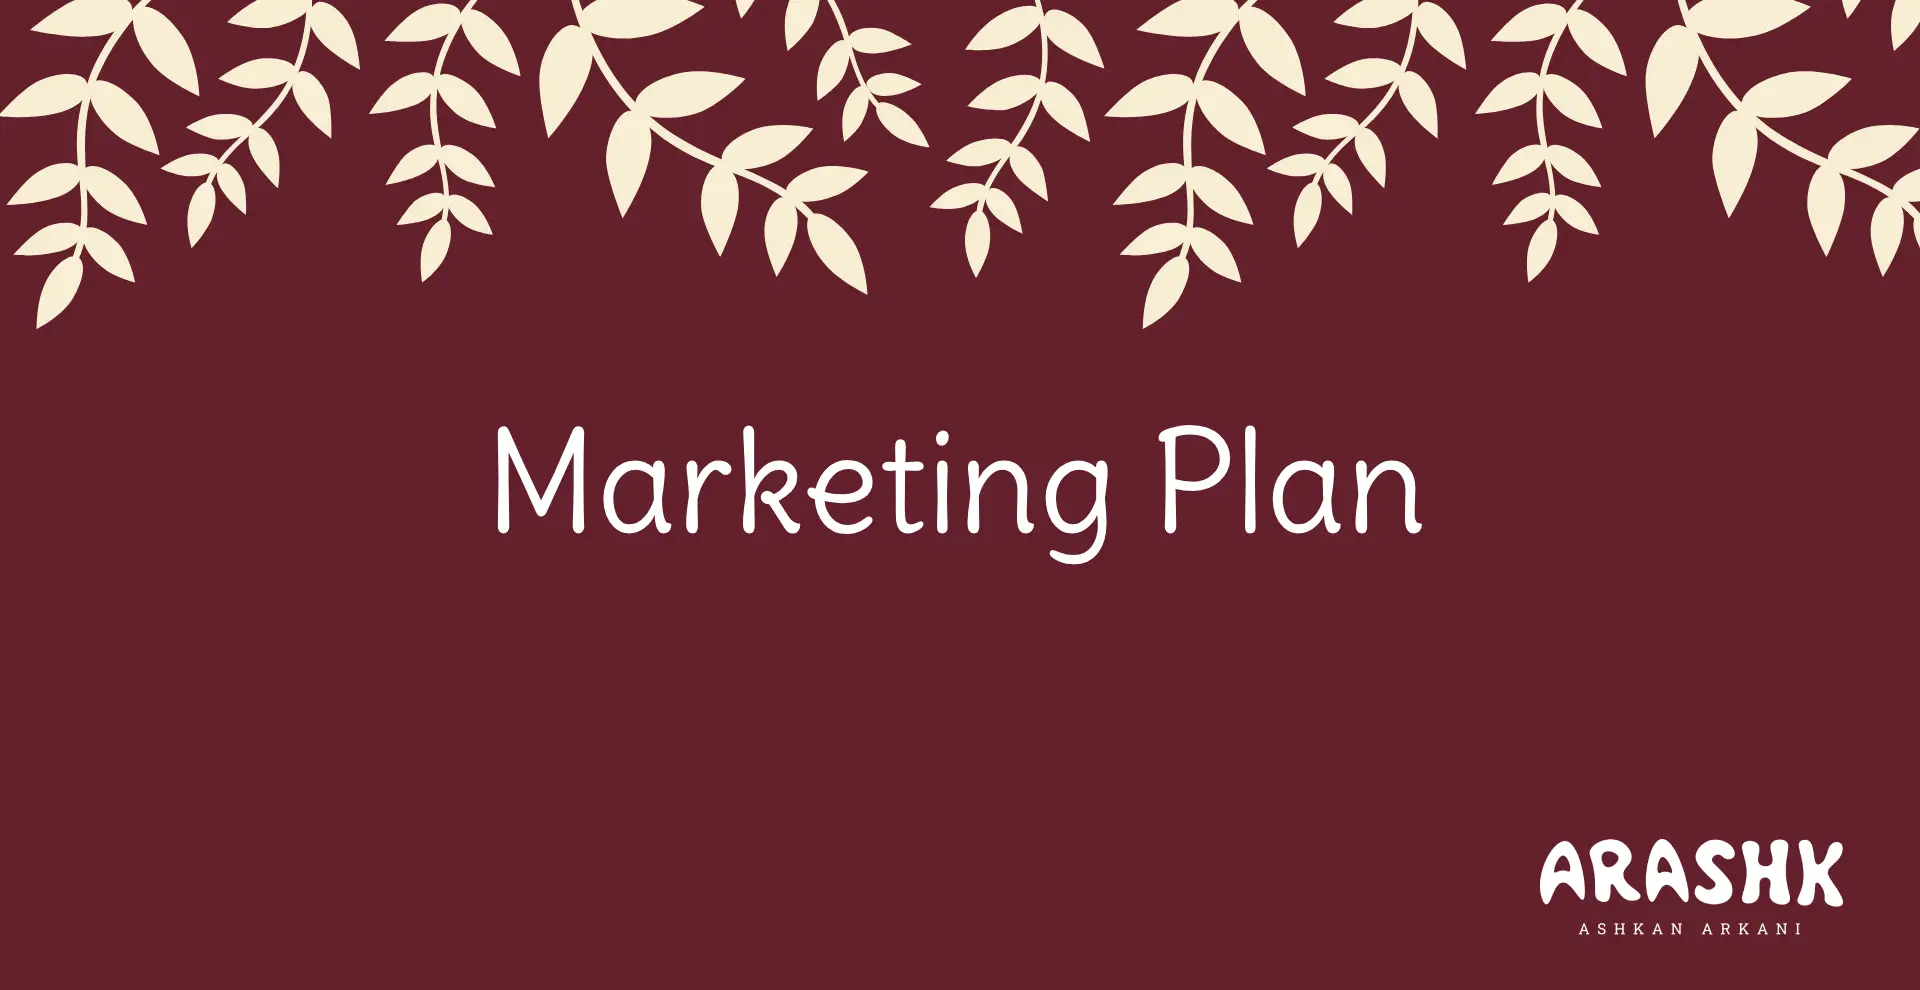 مارکتینگ پلن یا Marketing Plan